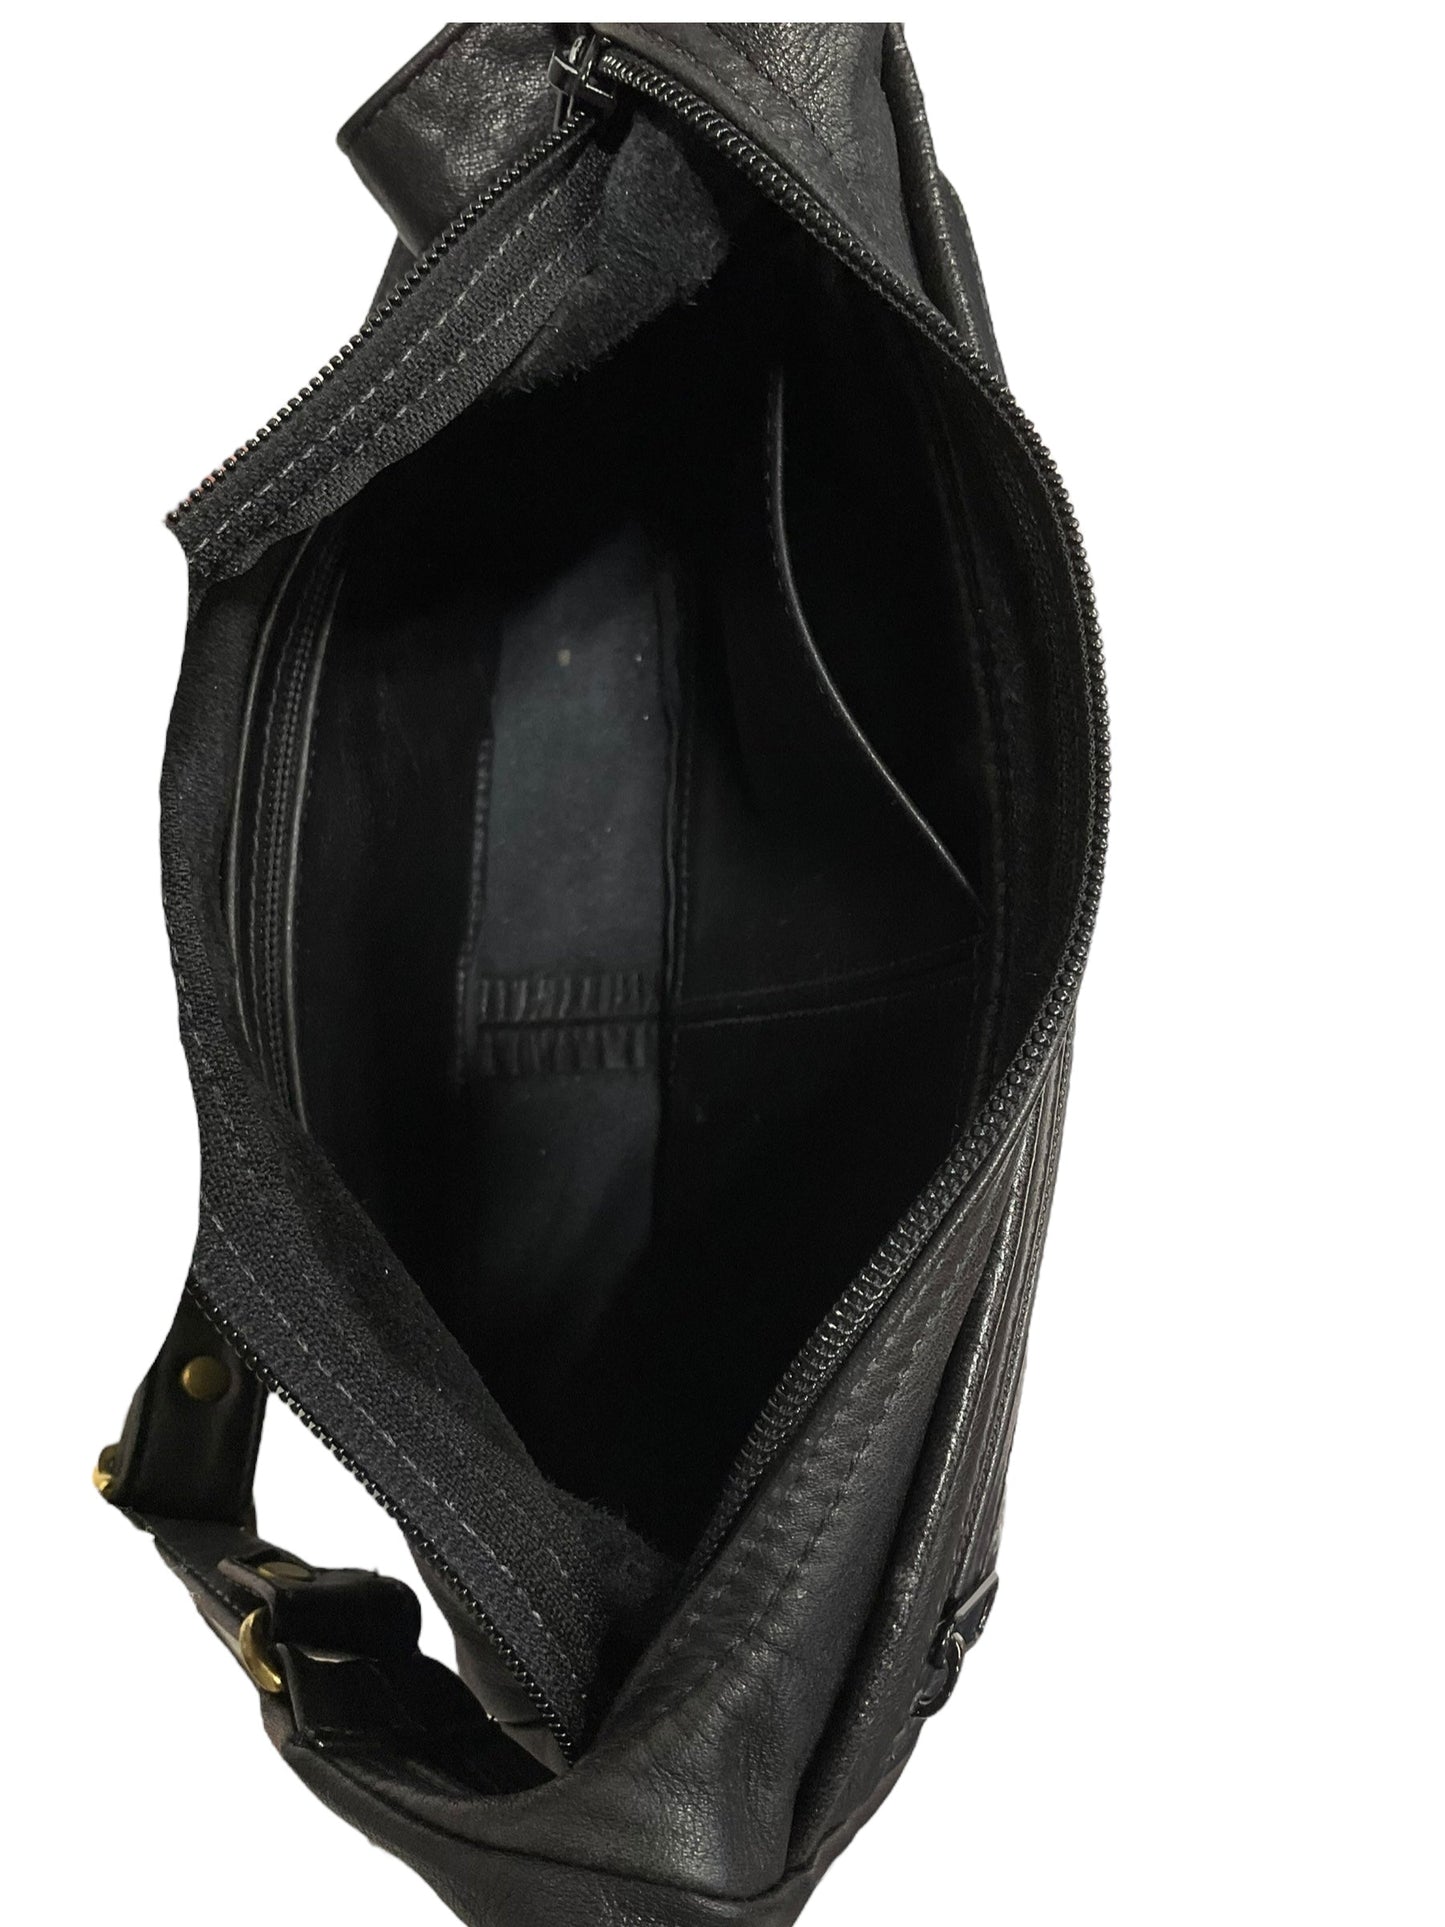 Handbag Leather Clothes Mentor, Size Medium